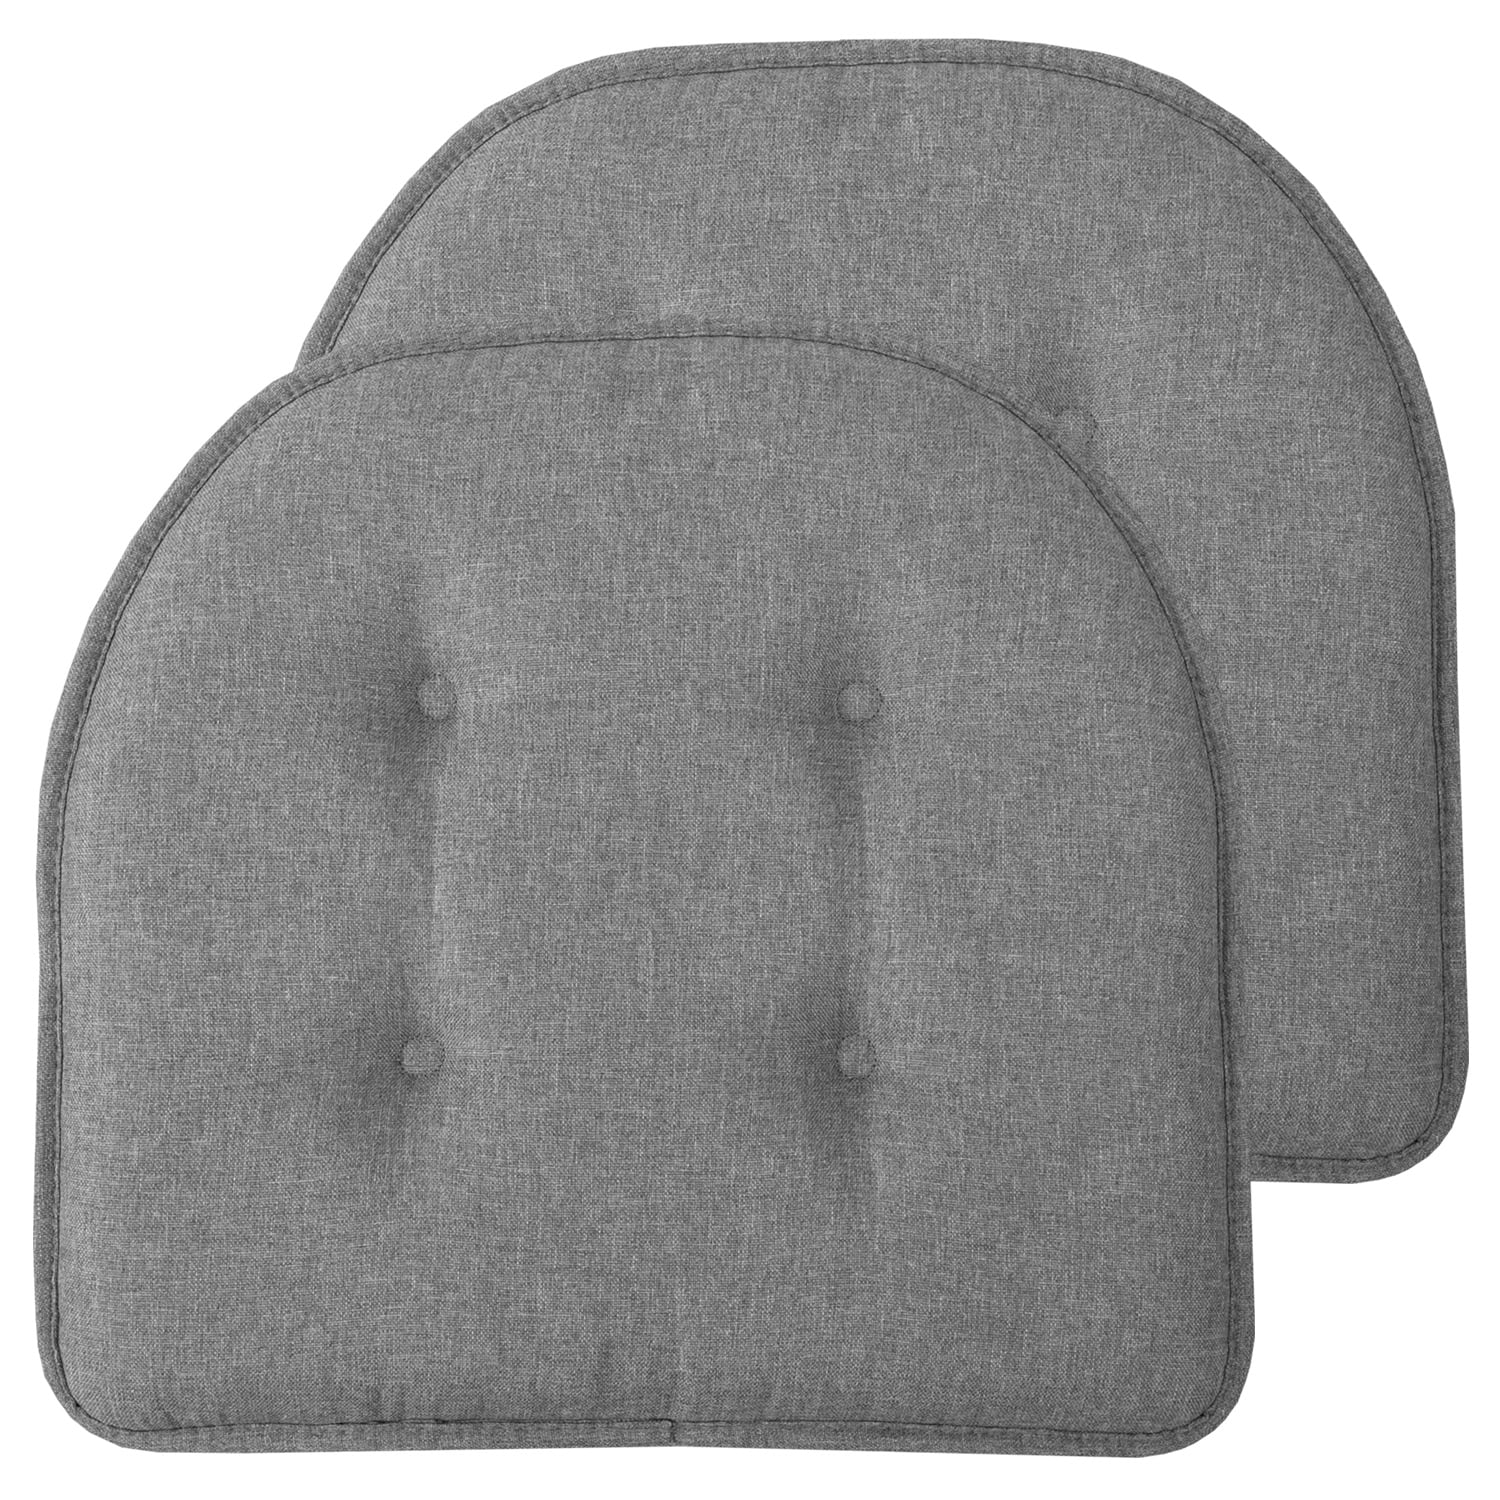 Master Memory Foam Seat Cushion 17 H x 17 12 W x 2 34 D Black - Office Depot